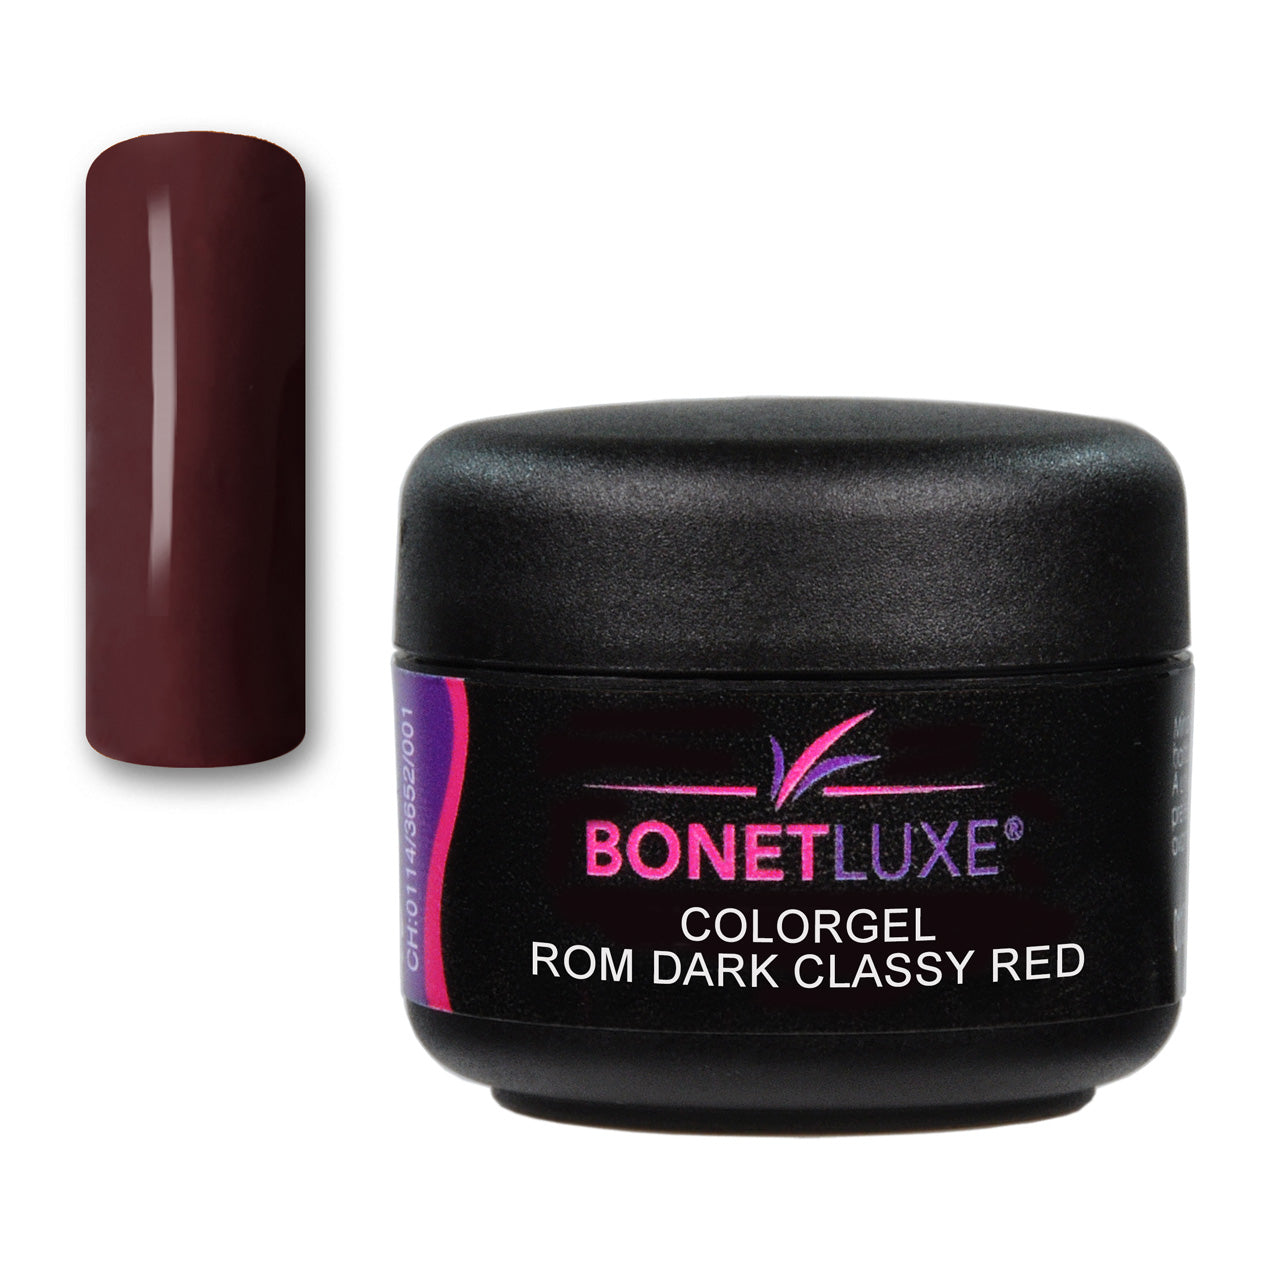 Bonetluxe Colorgel Rom Dark Classy Red